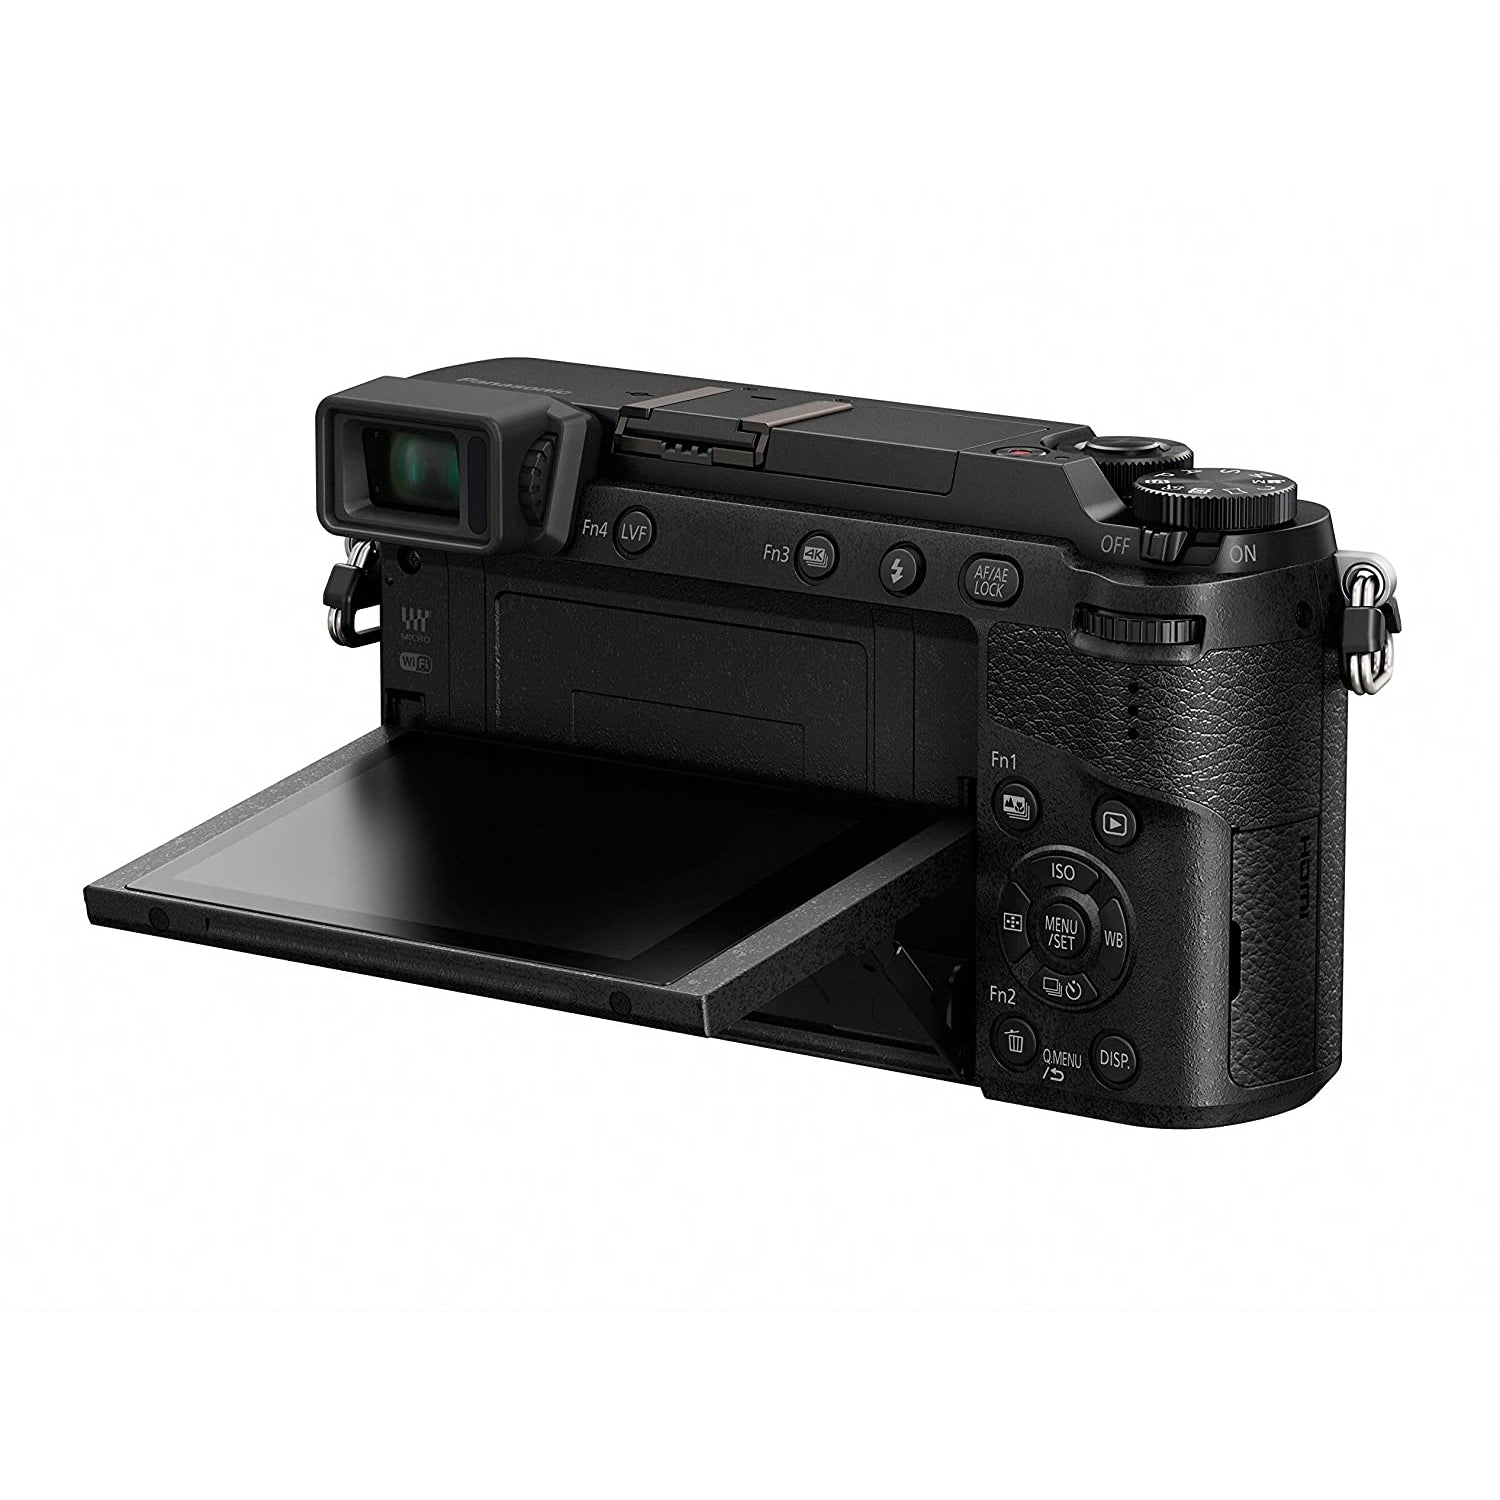 Panasonic DMC-GX80EB-K Digital Single Lens Mirrorless Camera Body Only - Black